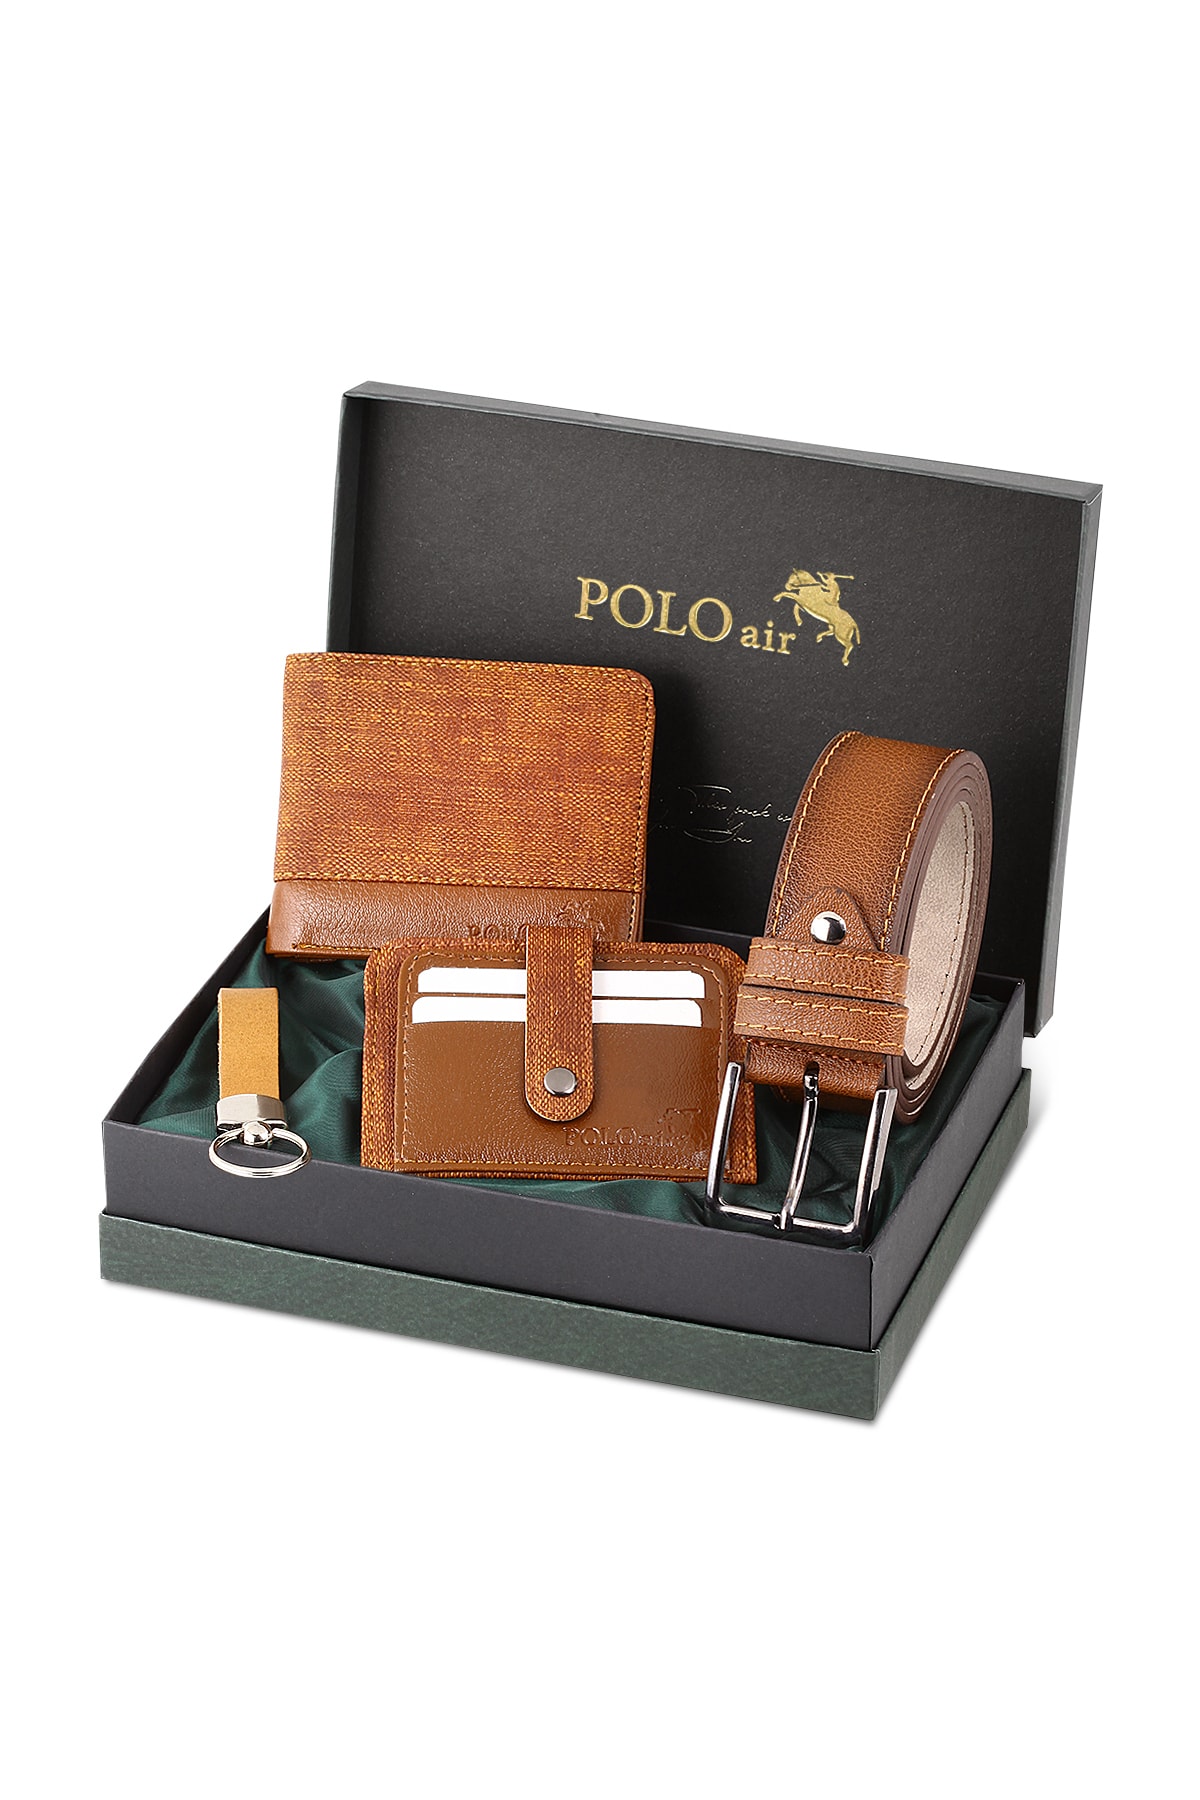 Levně Polo Air Belt, Wallet, Card Holder, Keychain, Tan Tan Set in a Gift Box